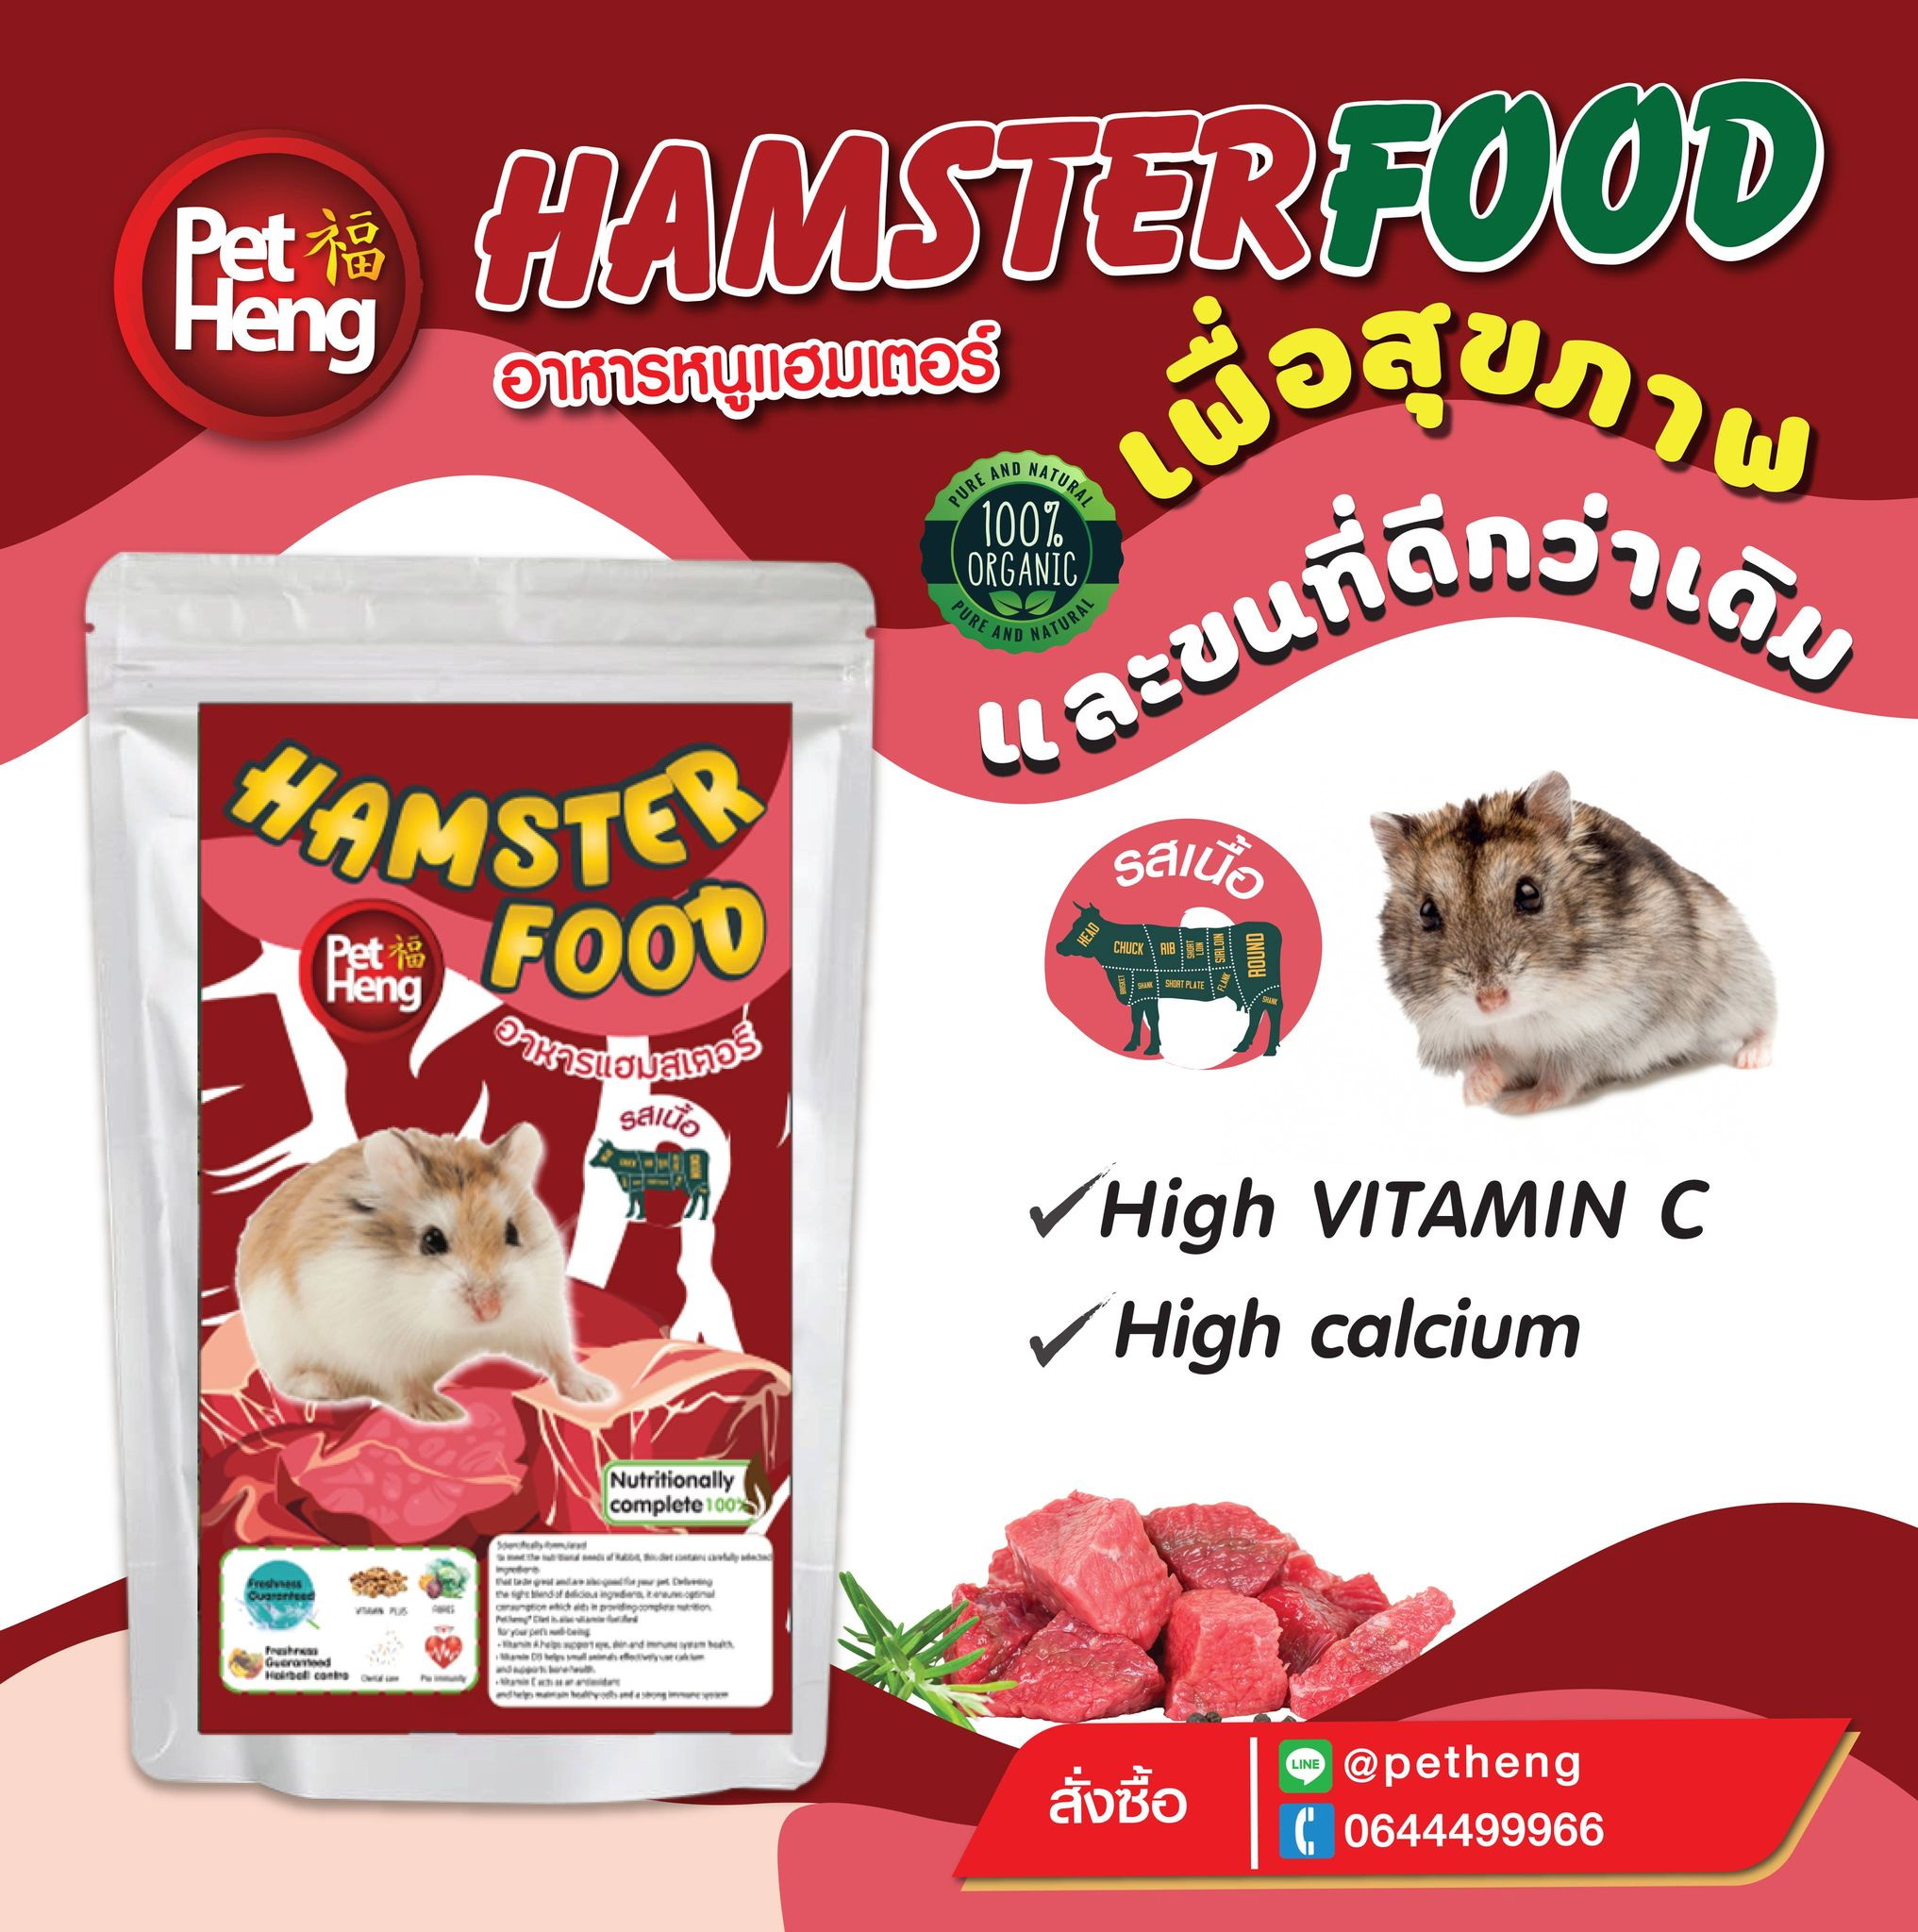 Petheng Hamster food เพ็ทเฮง อาหารหนูแฮมเตอร์ ทุกสายพันธุ์ 180 กรัม